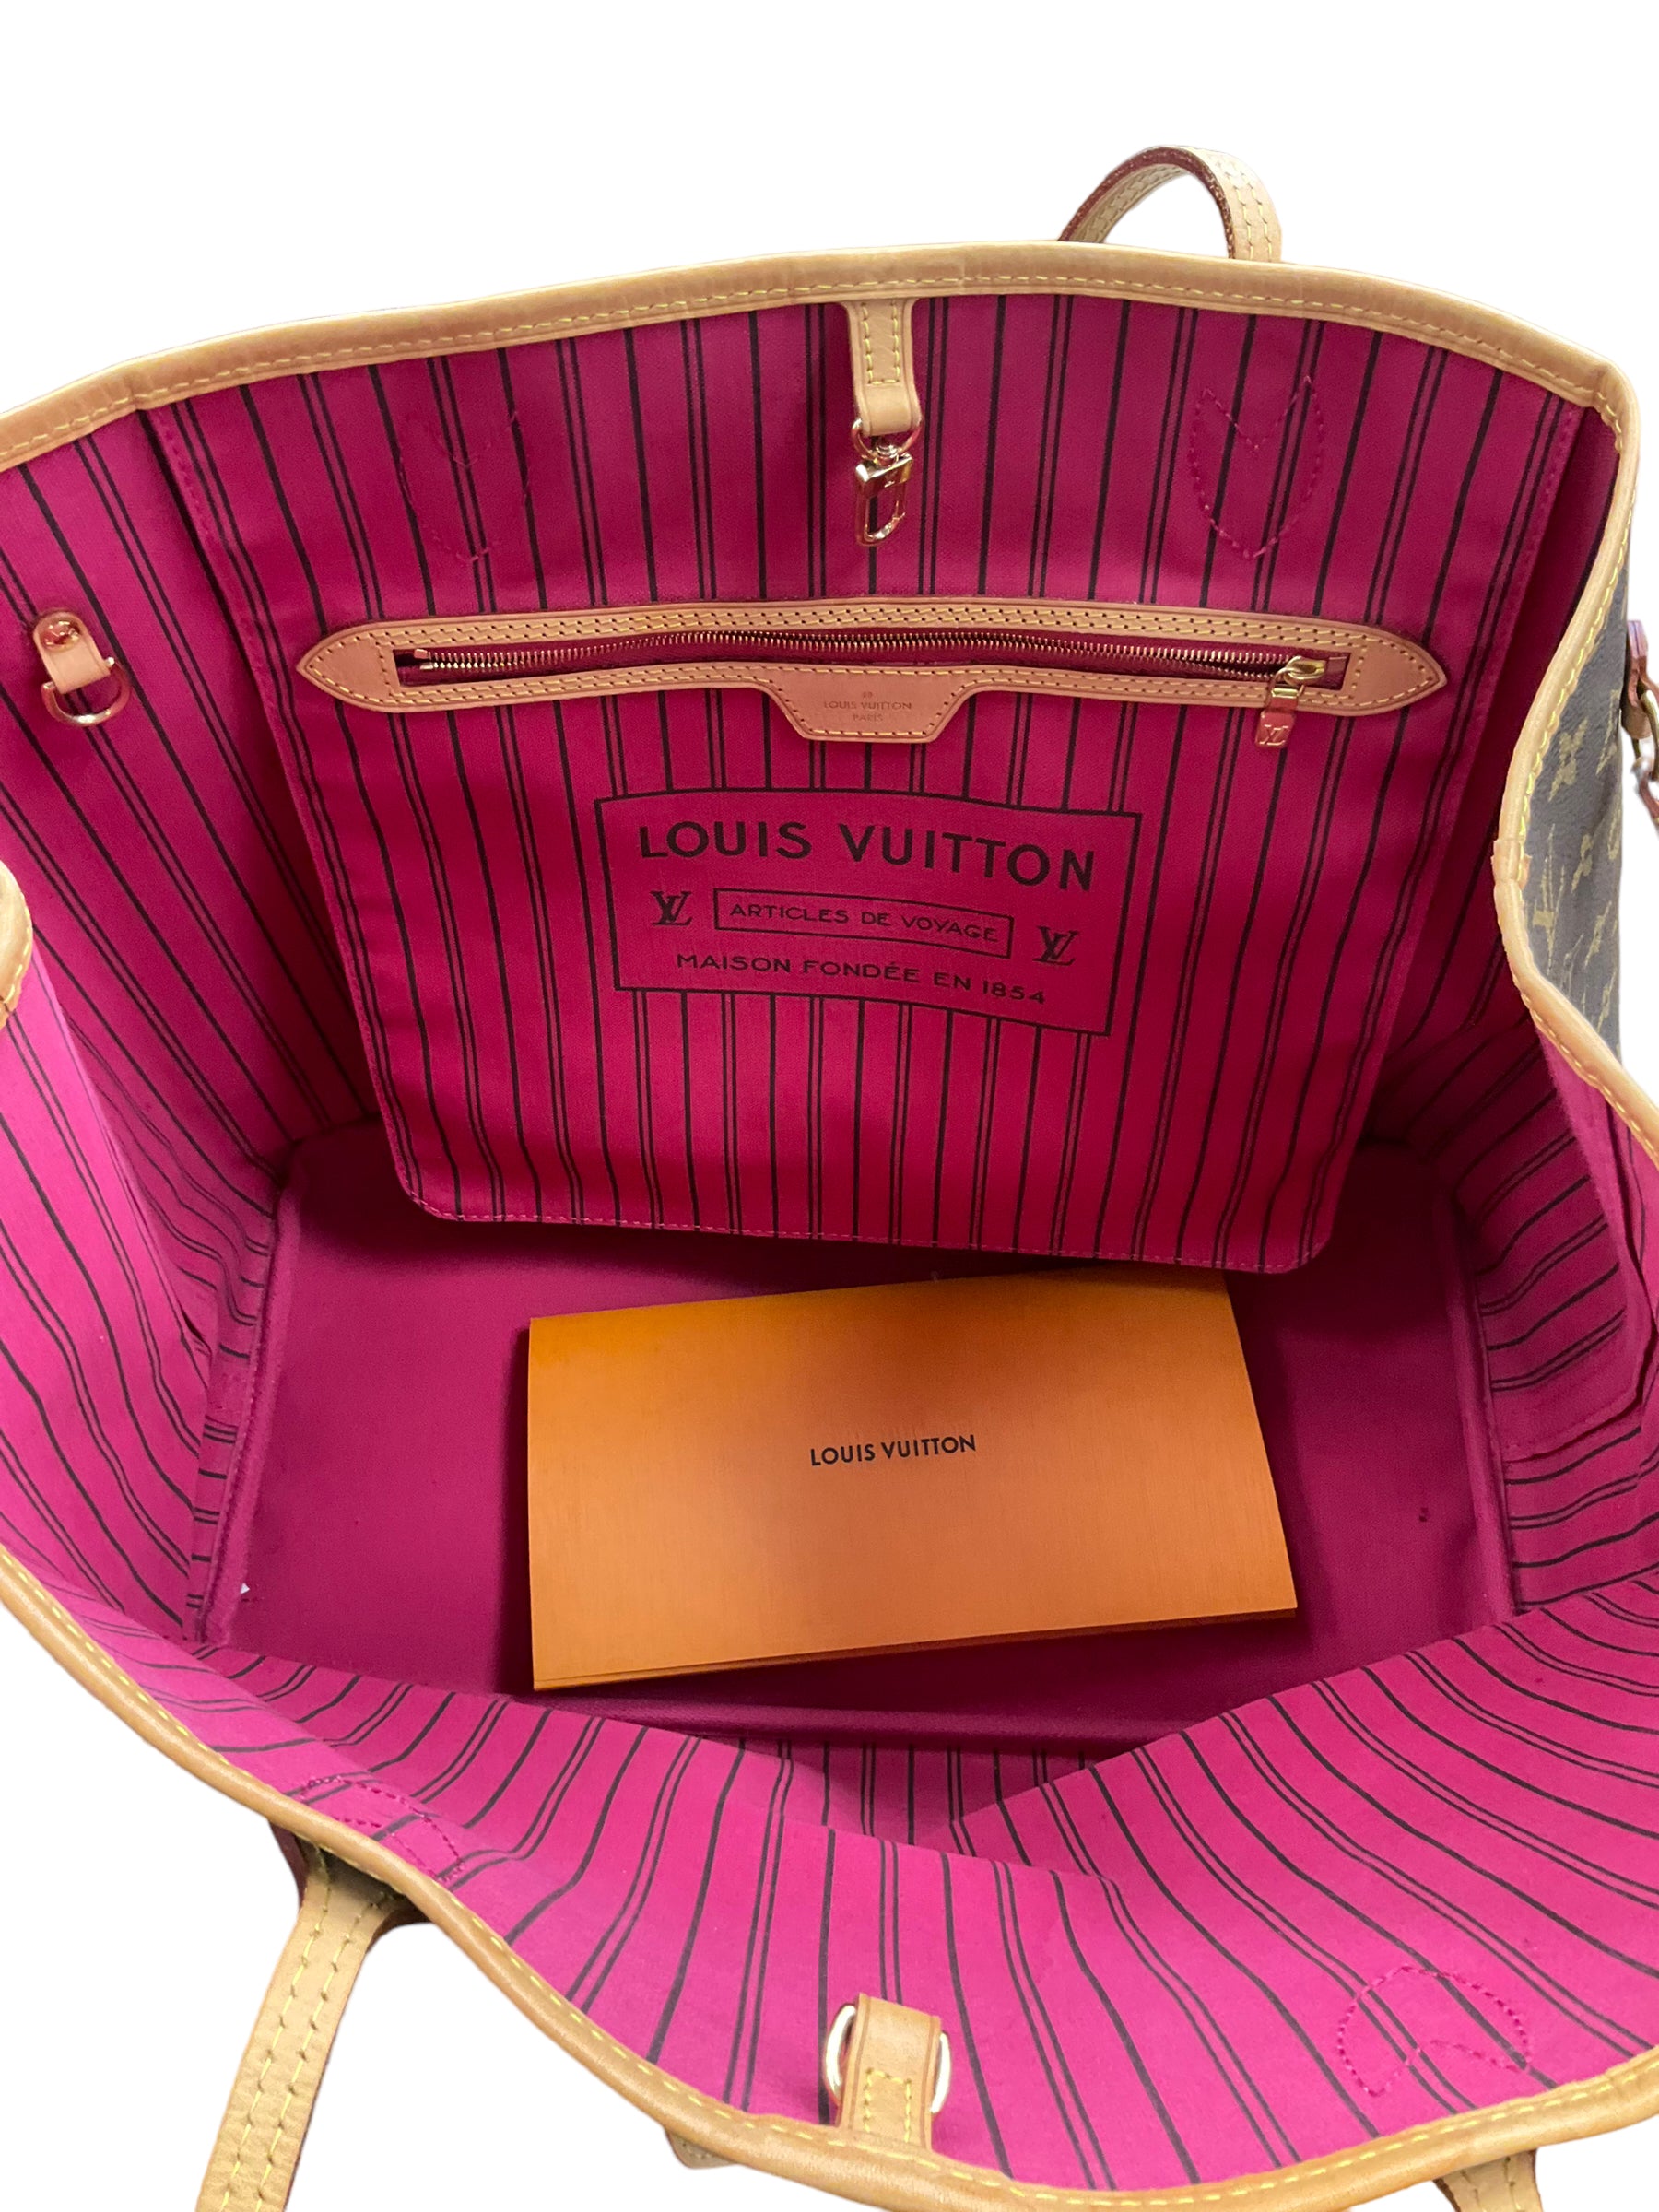 Louis Vuitton Maison fondee en 1854, Women's Fashion, Bags